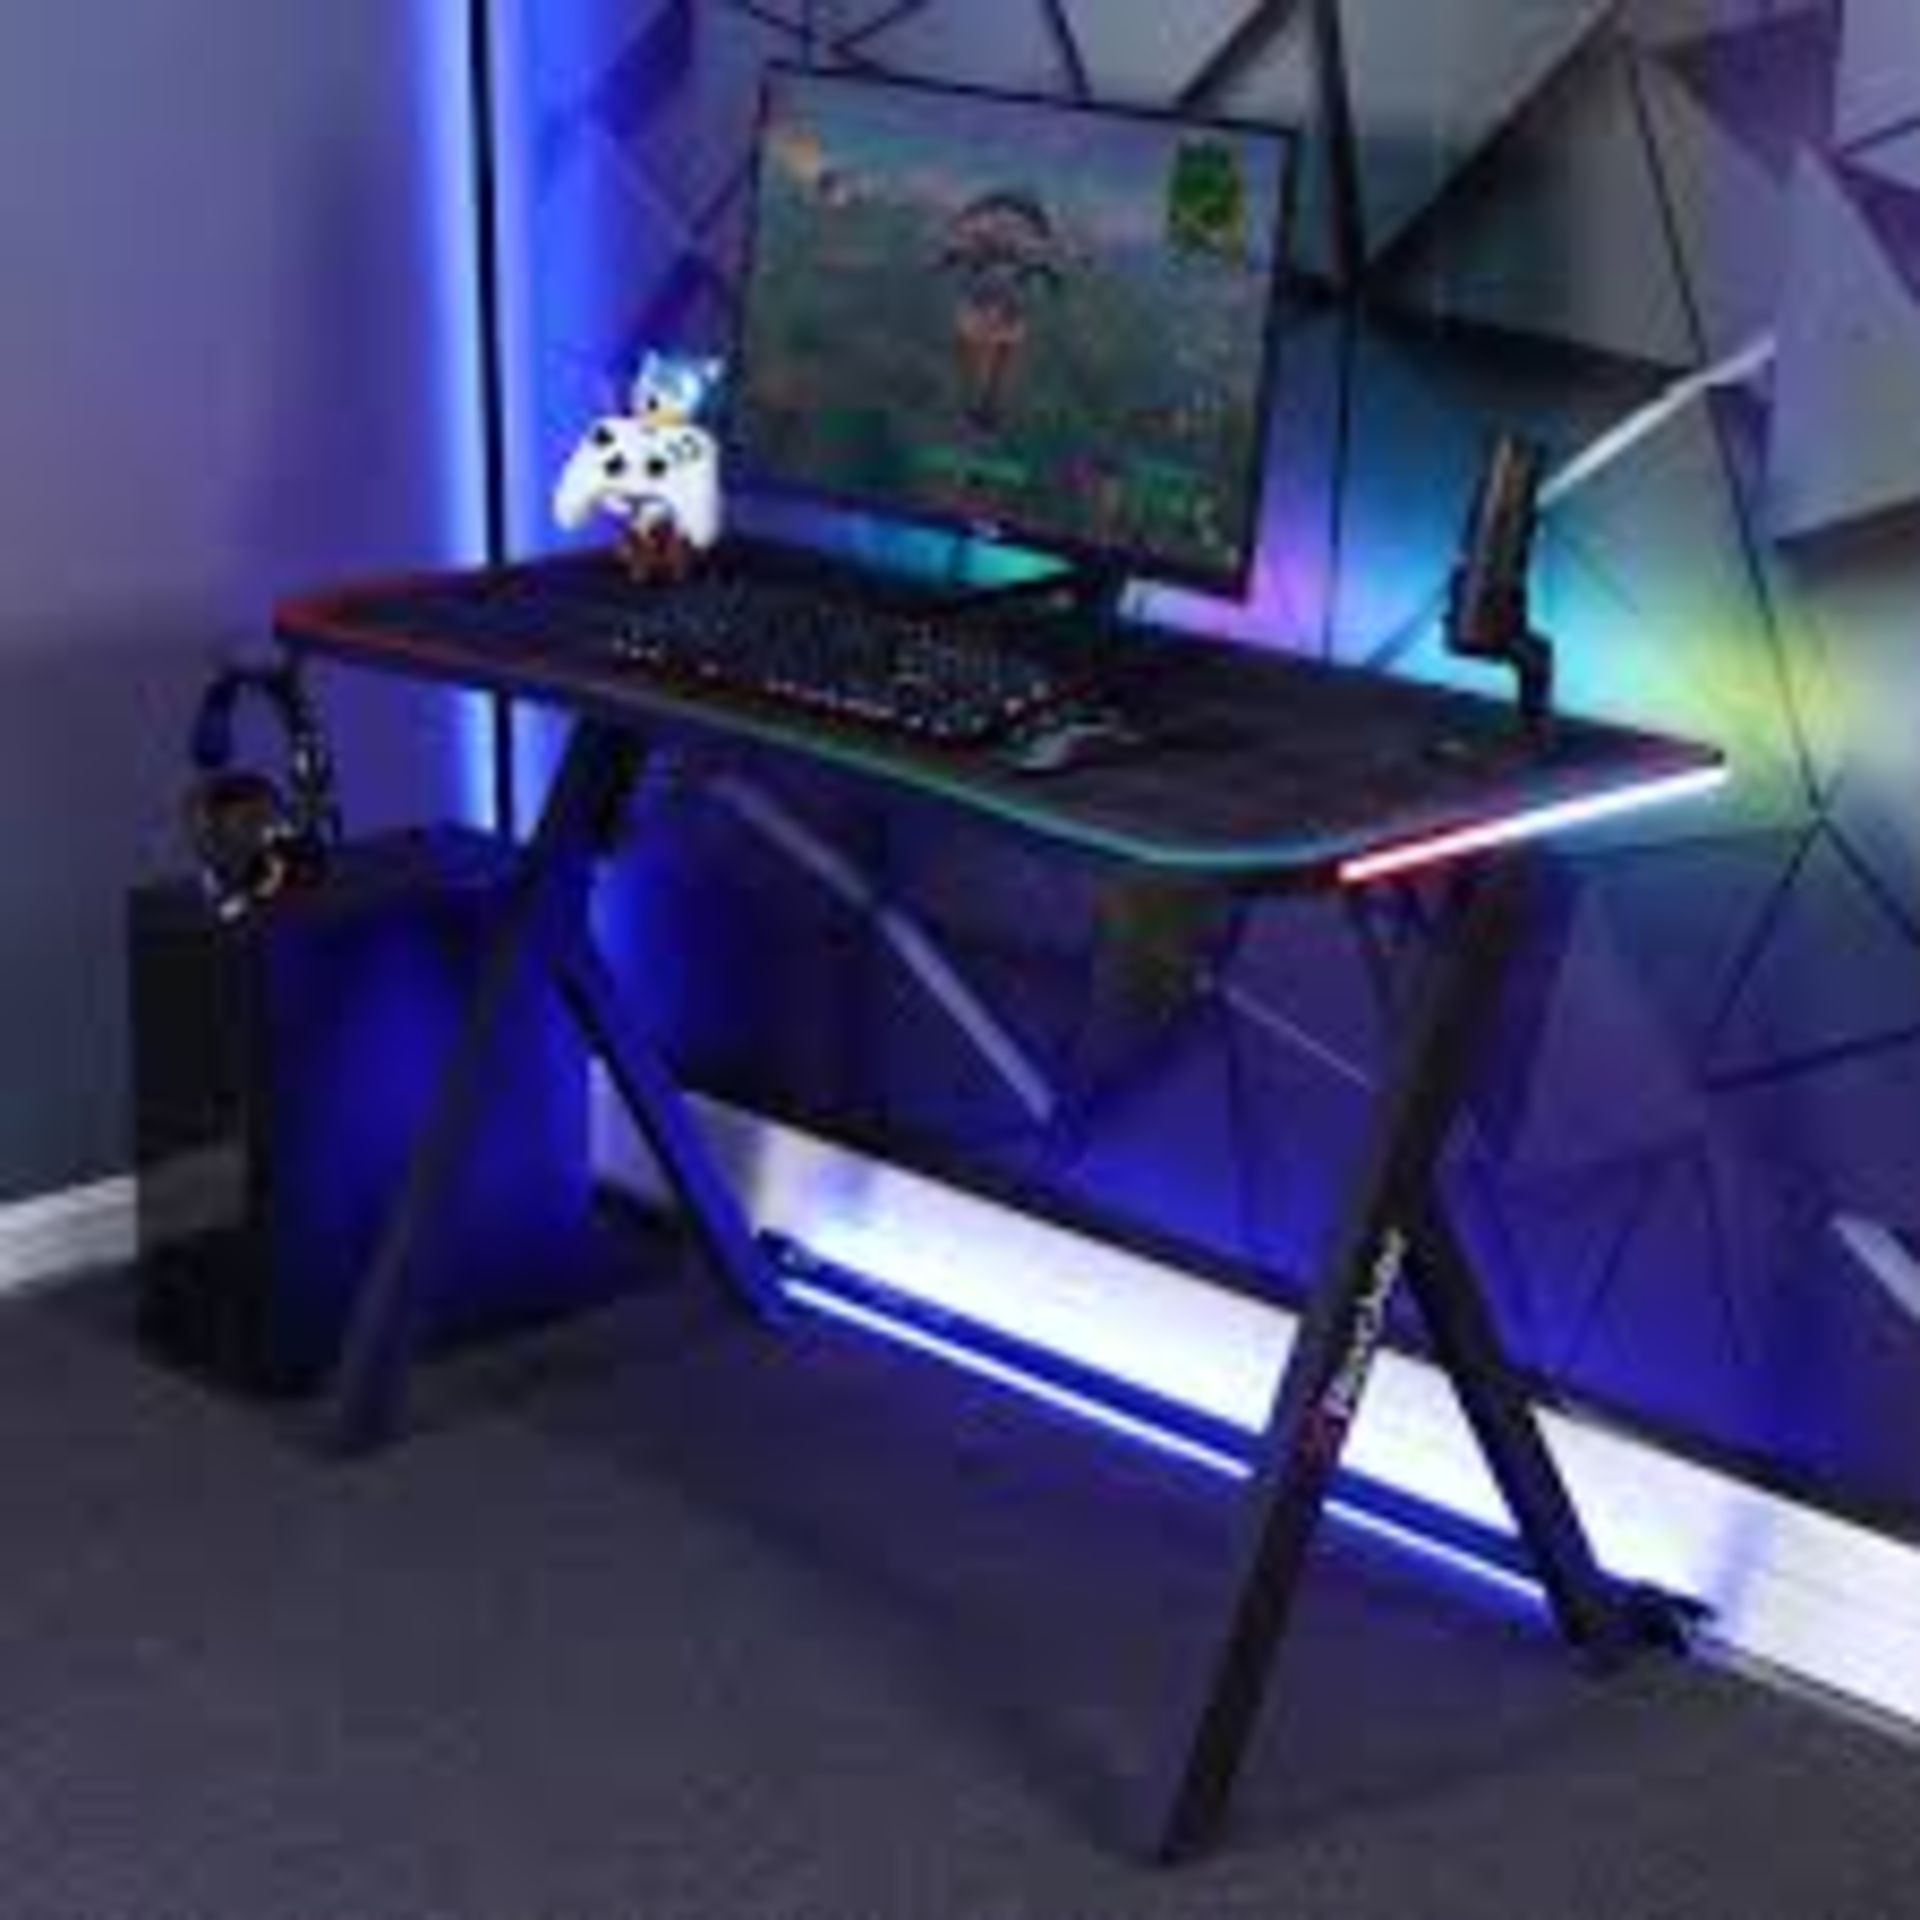 x Rocker Lumio RGB Gaming Desk. - R14.8. Take gaming to the next level with the Lumio RGB Gaming